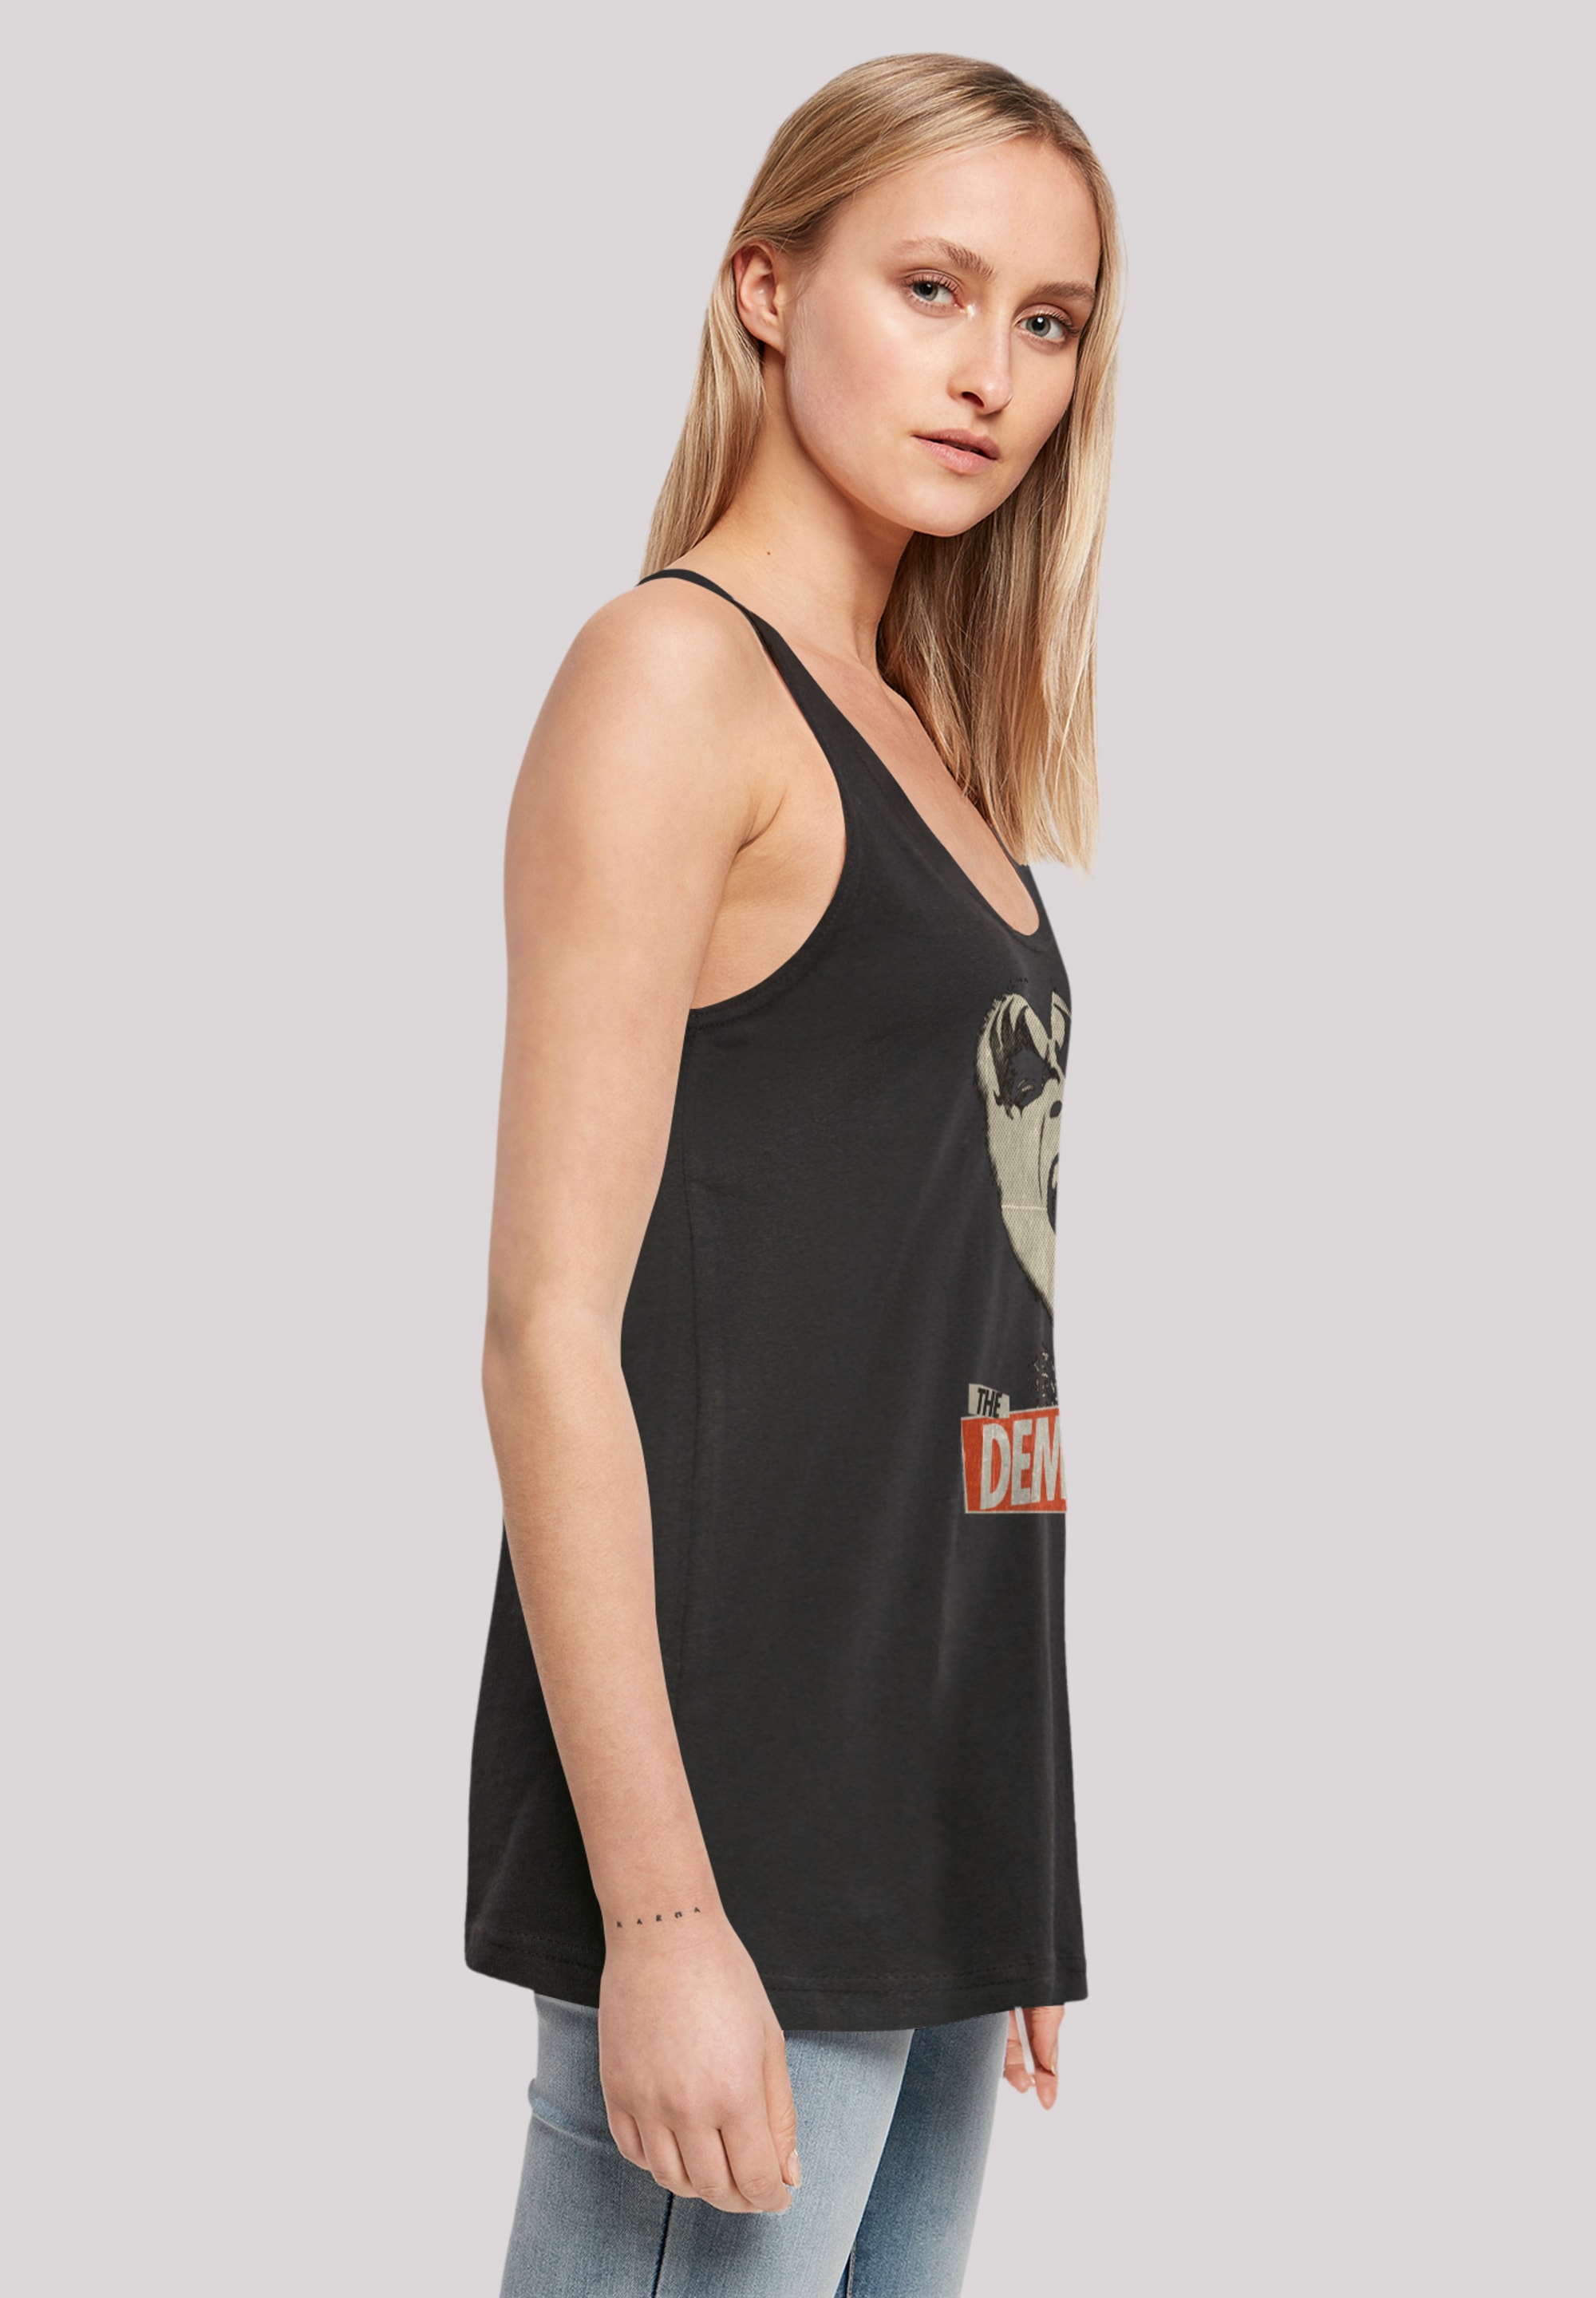 F4NT4STIC T-Shirt »Kiss Hard Rock Band Demon«, Premium Qualität online  kaufen | I'm walking